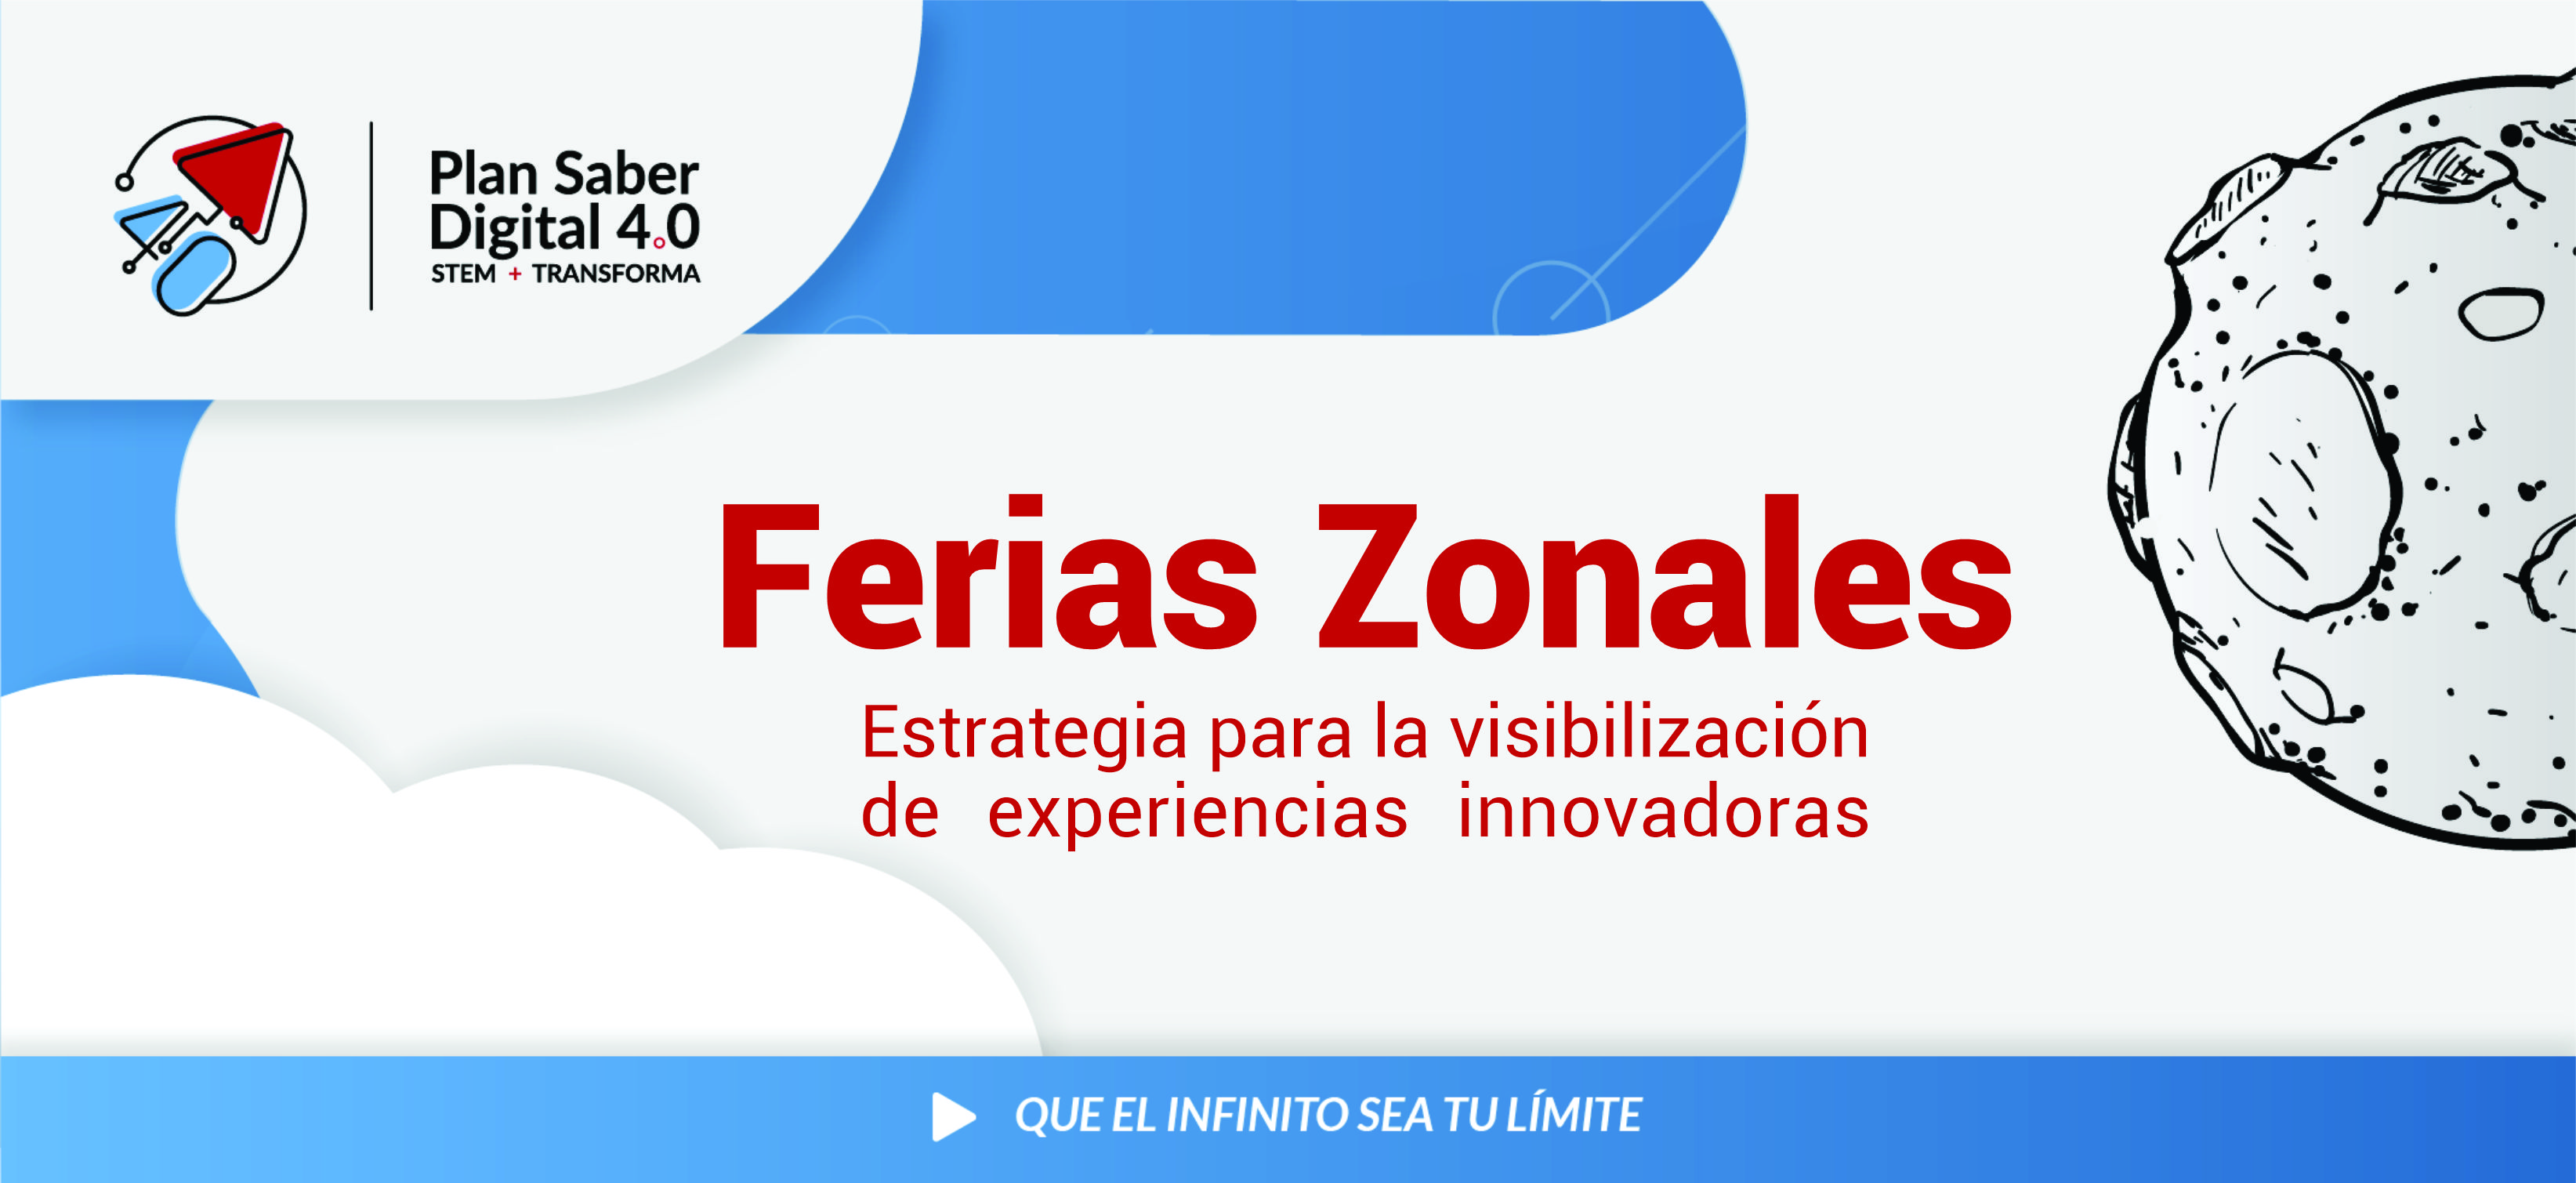 Ferias zonales PSD4.0